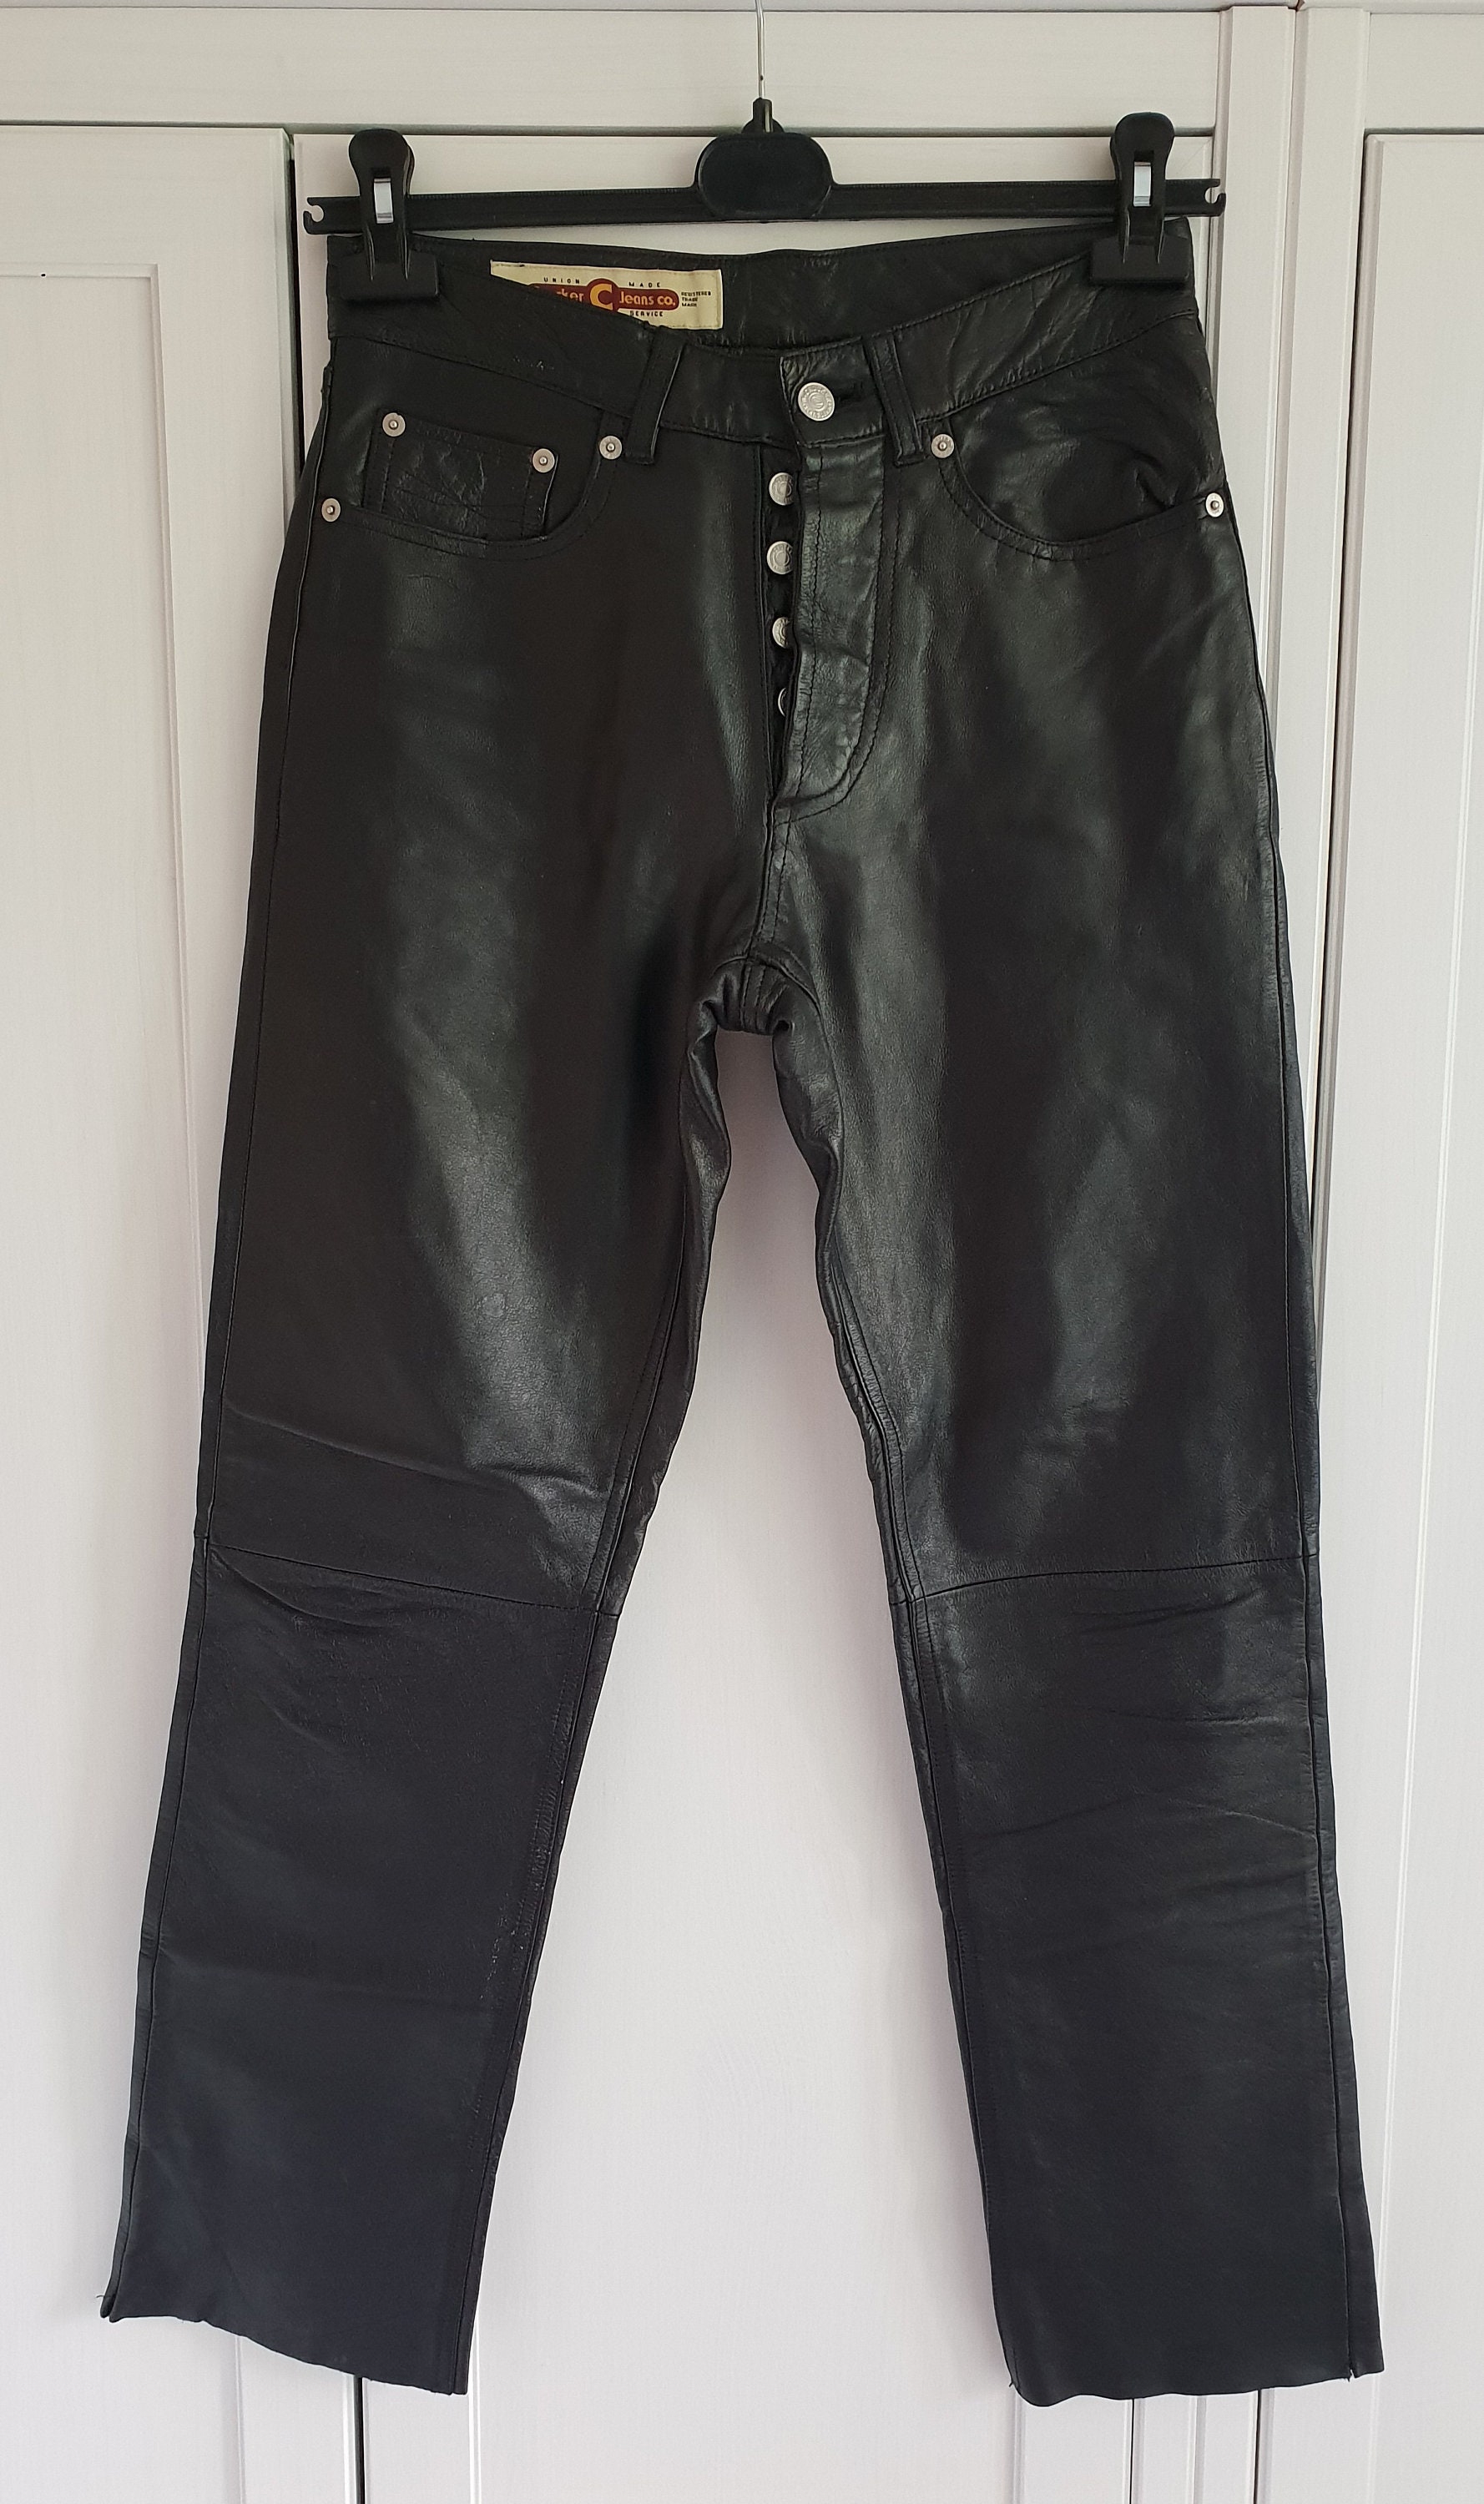 Crocker Leather Pants Vintage High Waisted Black Leather Pants - Etsy